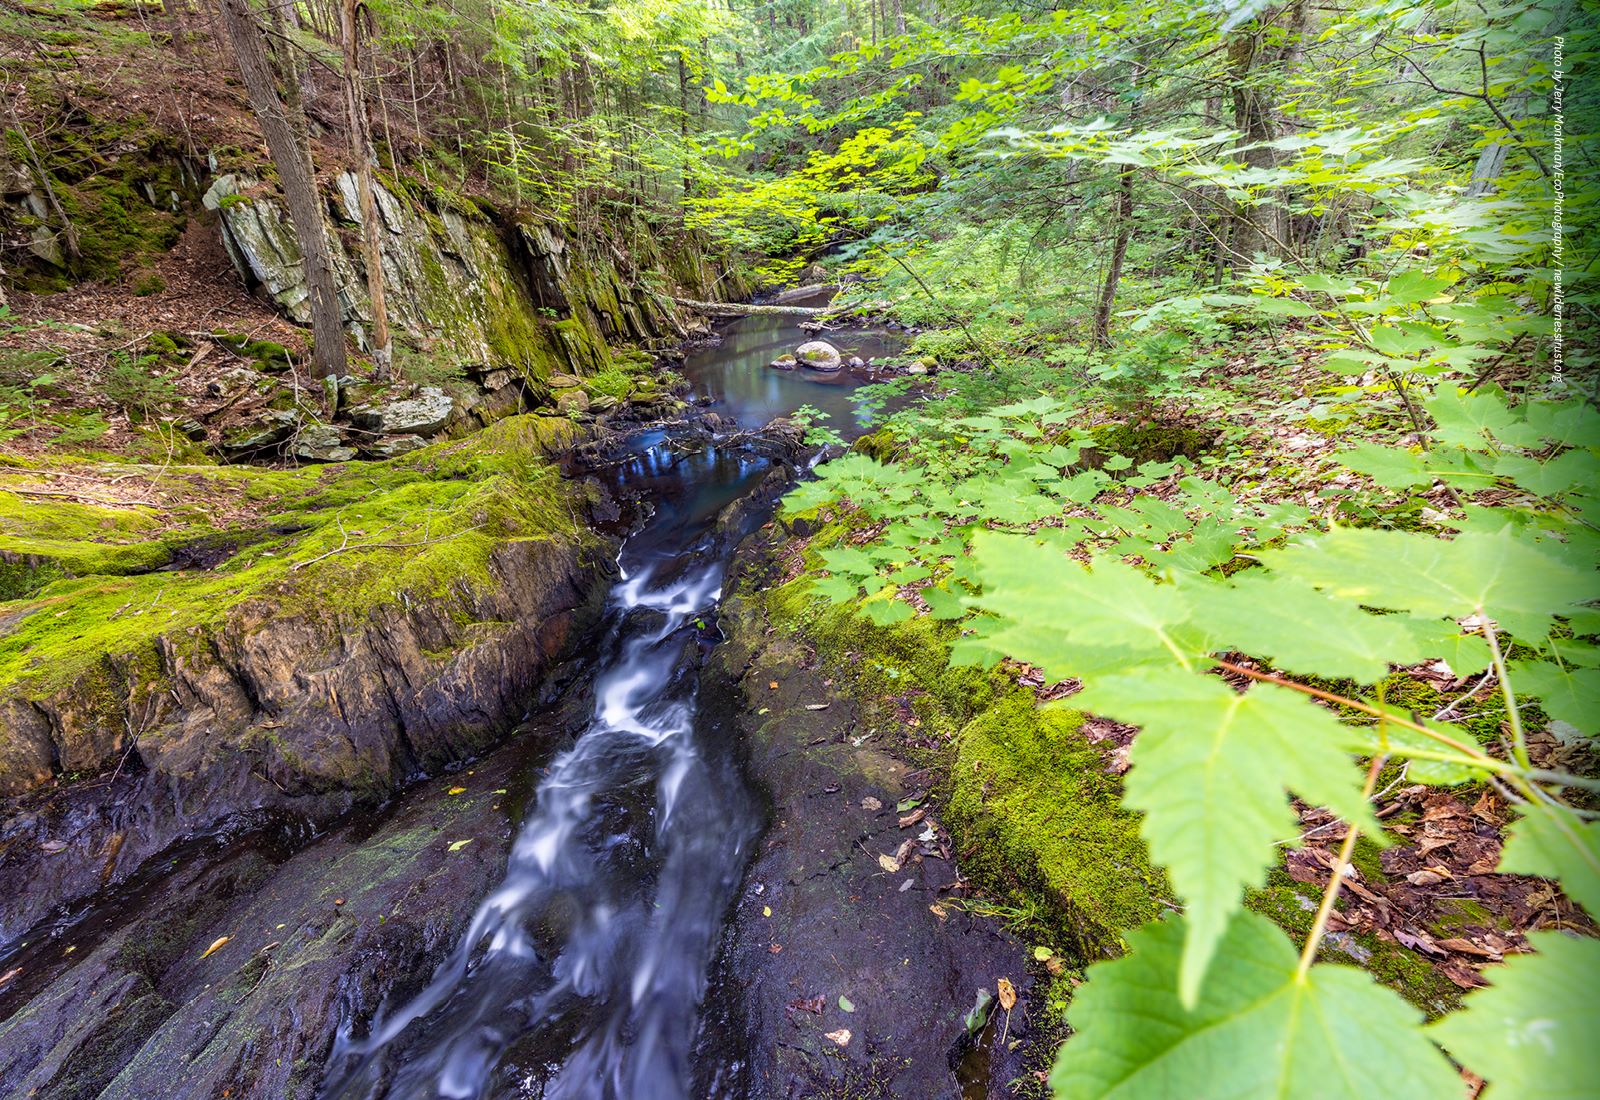 A stream in Vermont